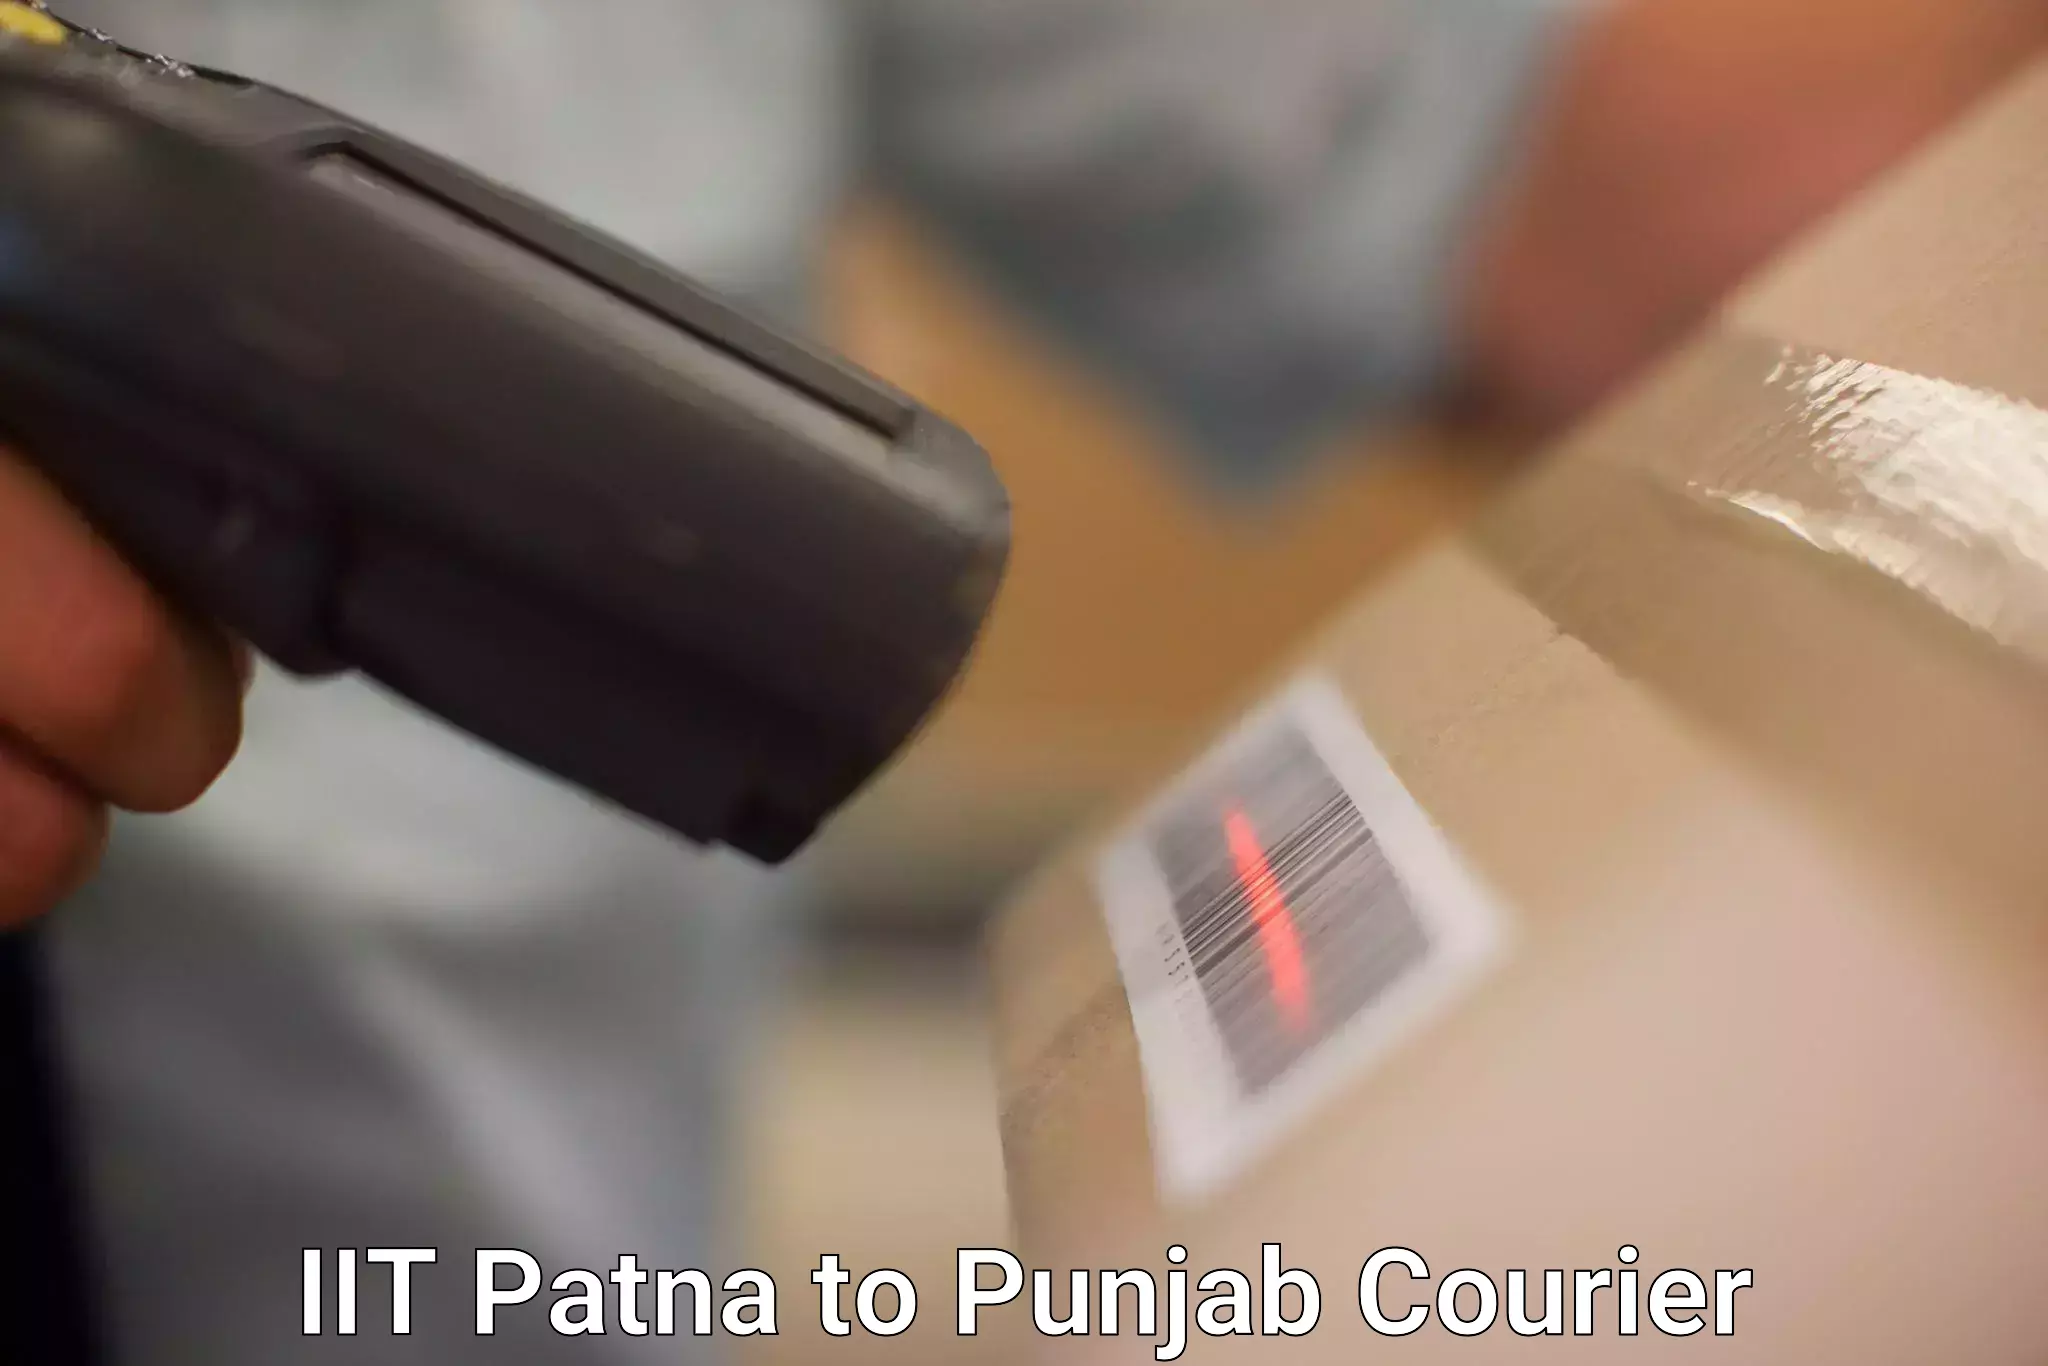 User-friendly courier app IIT Patna to Jalandhar